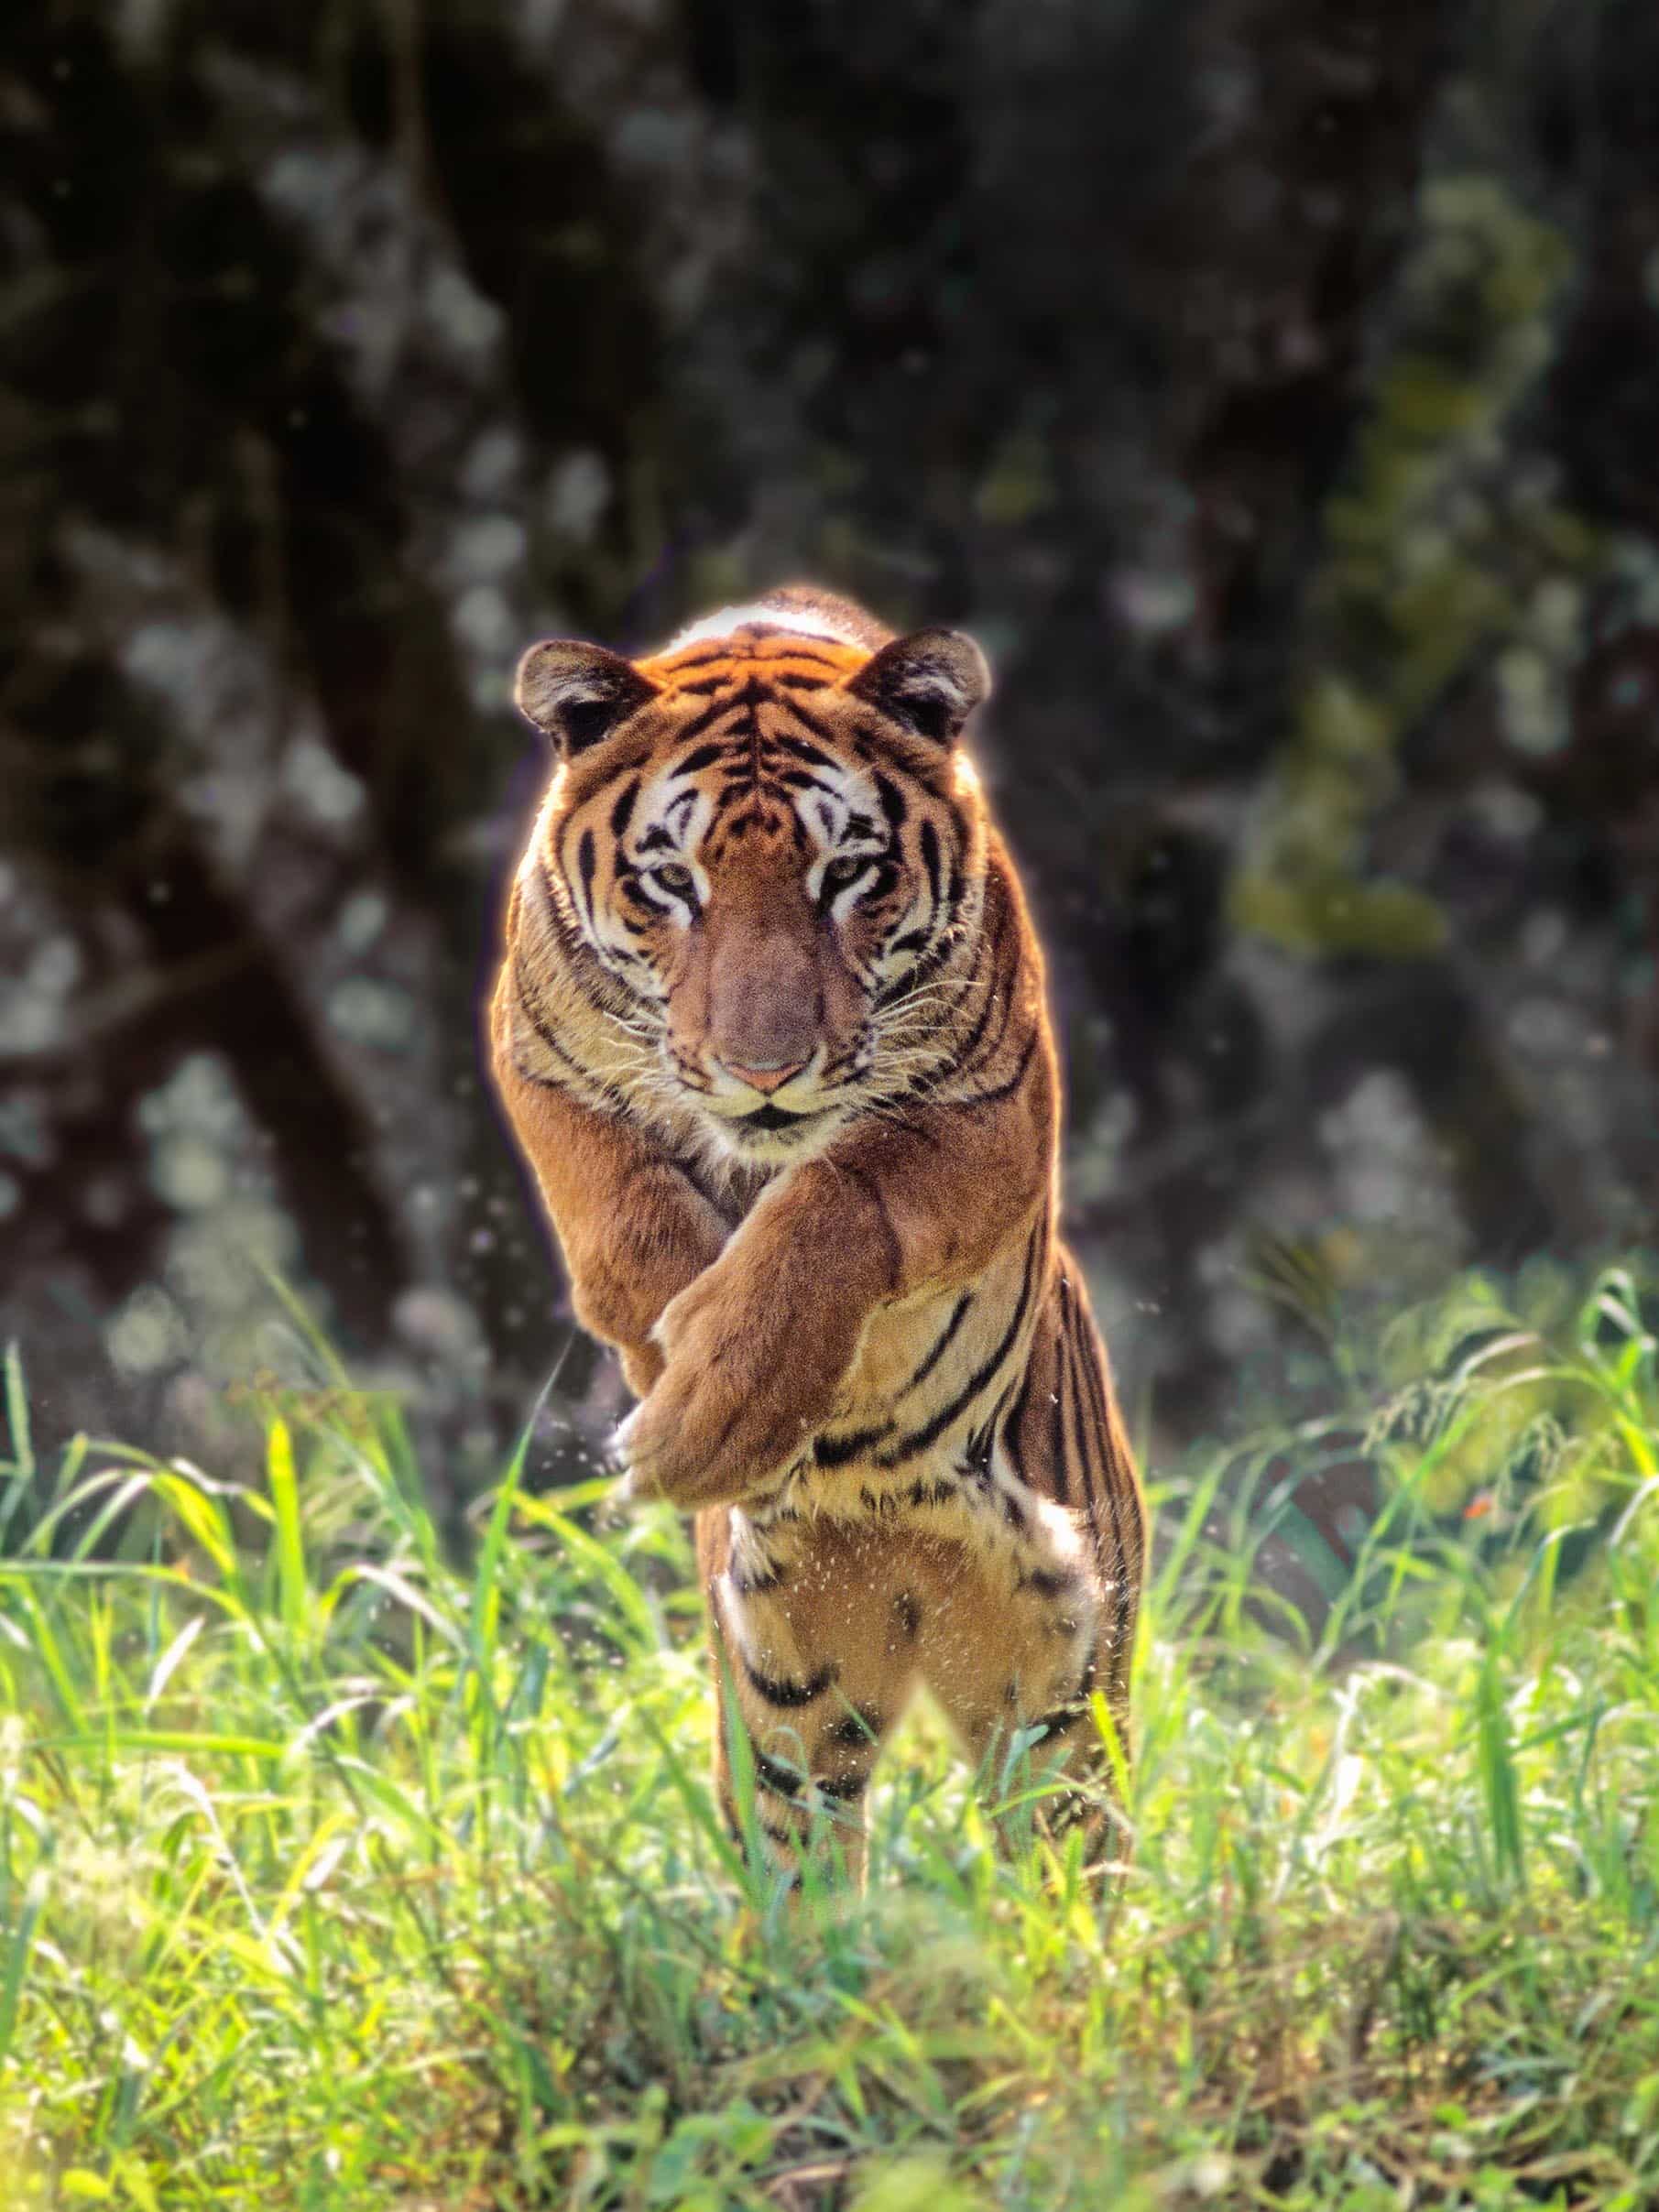 An Indian tiger.